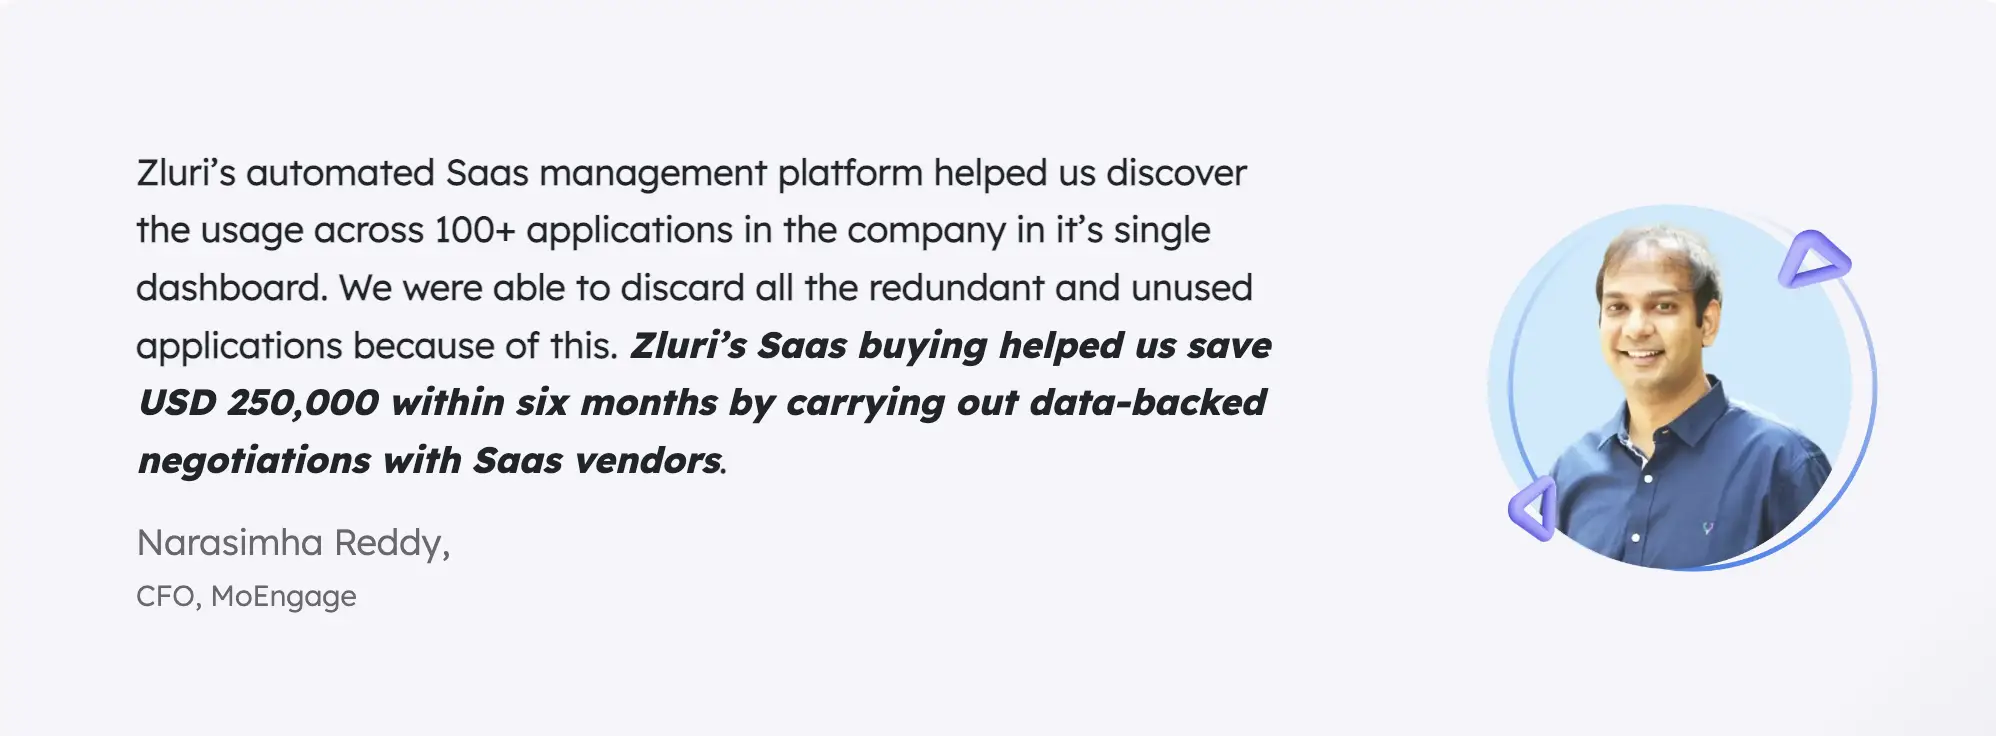 Zluri's SaaS management platform